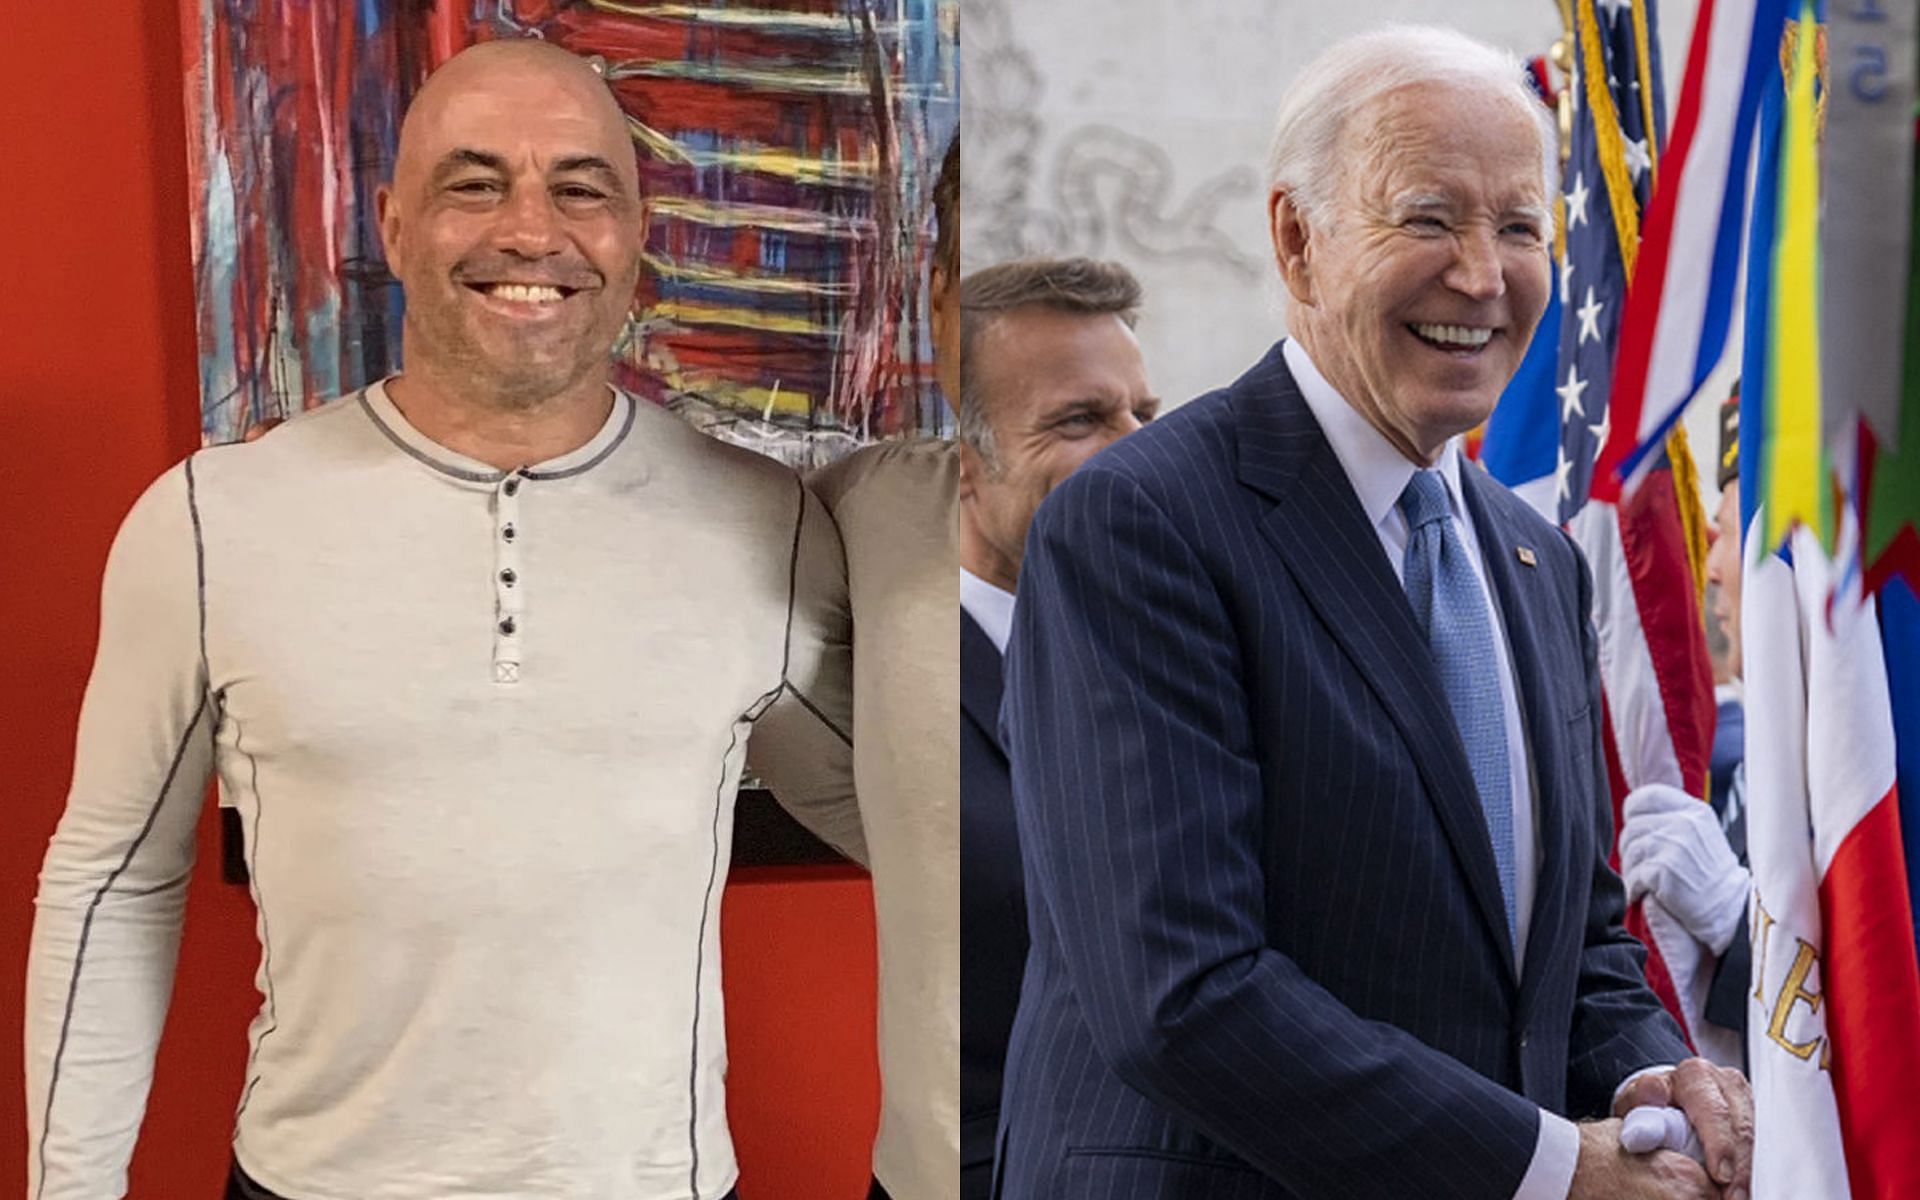 Joe Rogan (left) thinks US President Joe Biden (right) is too old to be handling responsibility [Images courtesy: @joerogan and @POTUS on X]